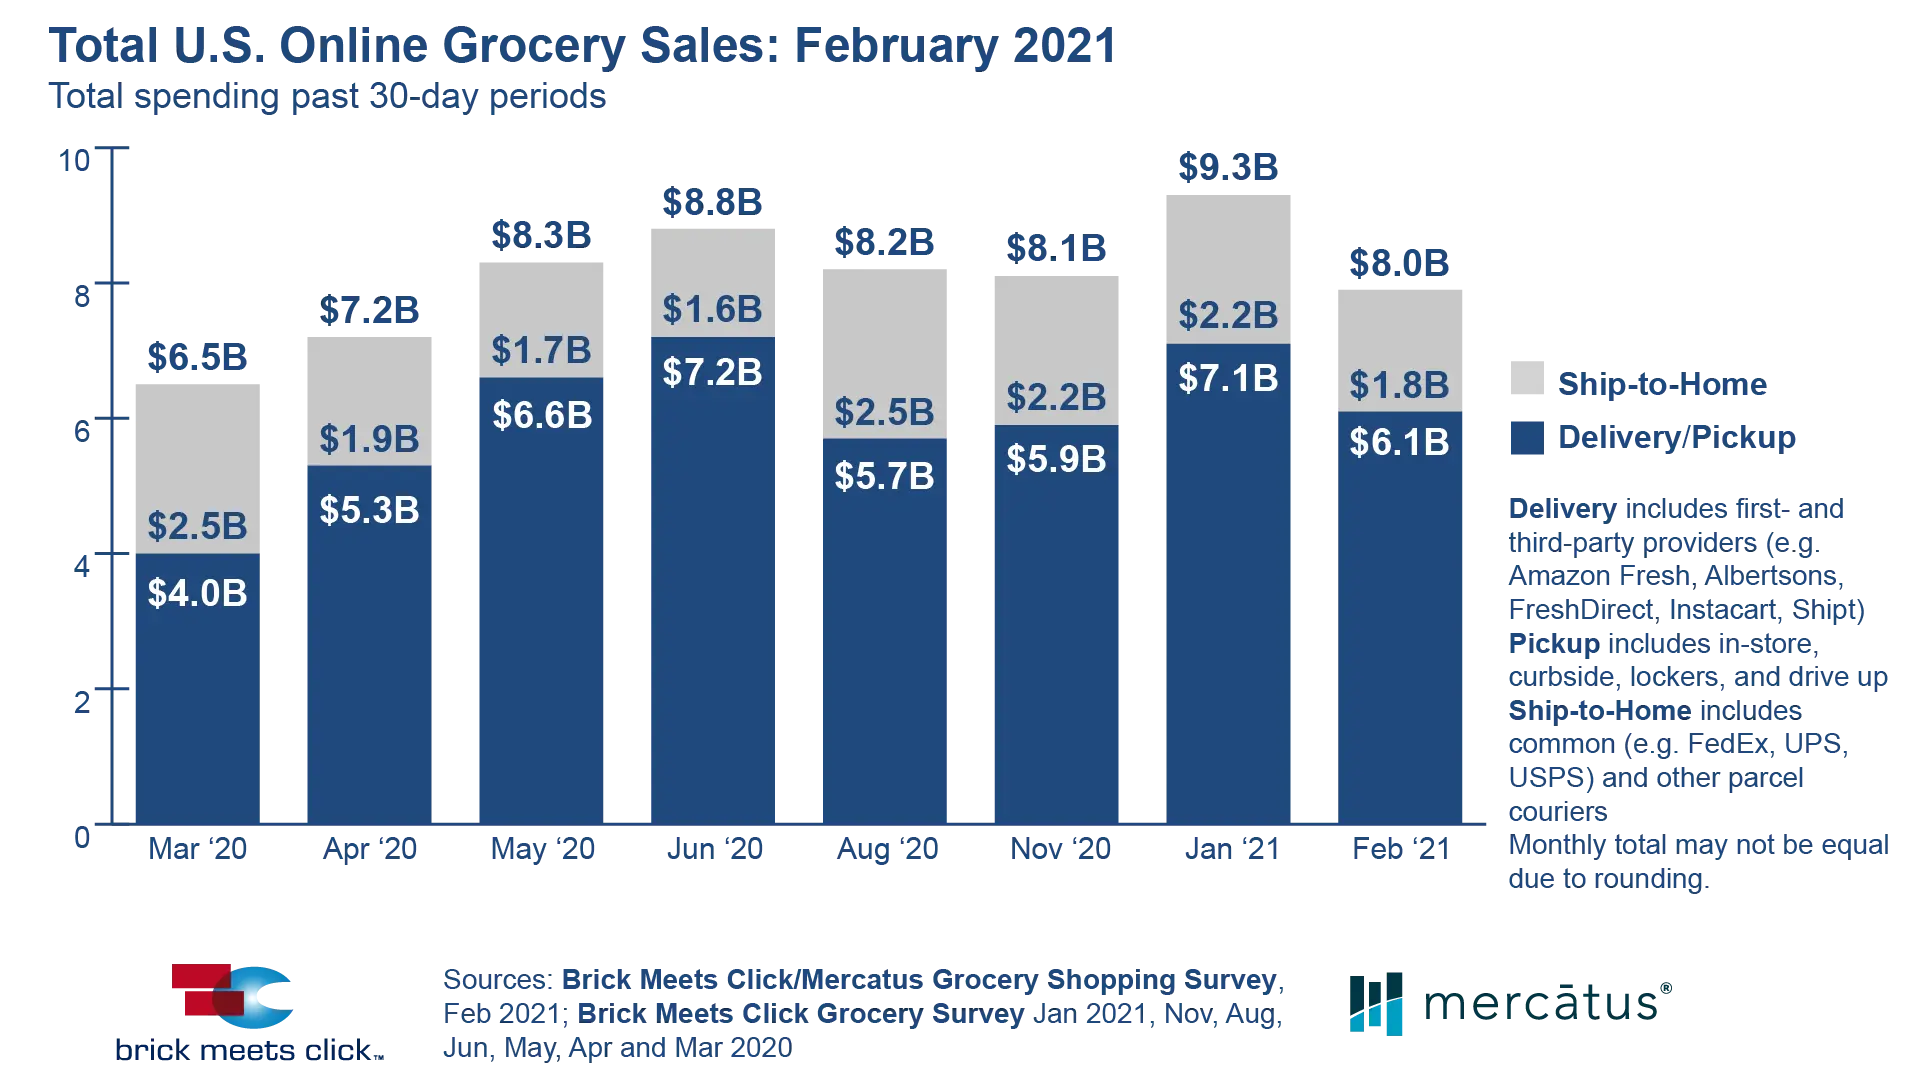 U.S. Online Grocery Sales